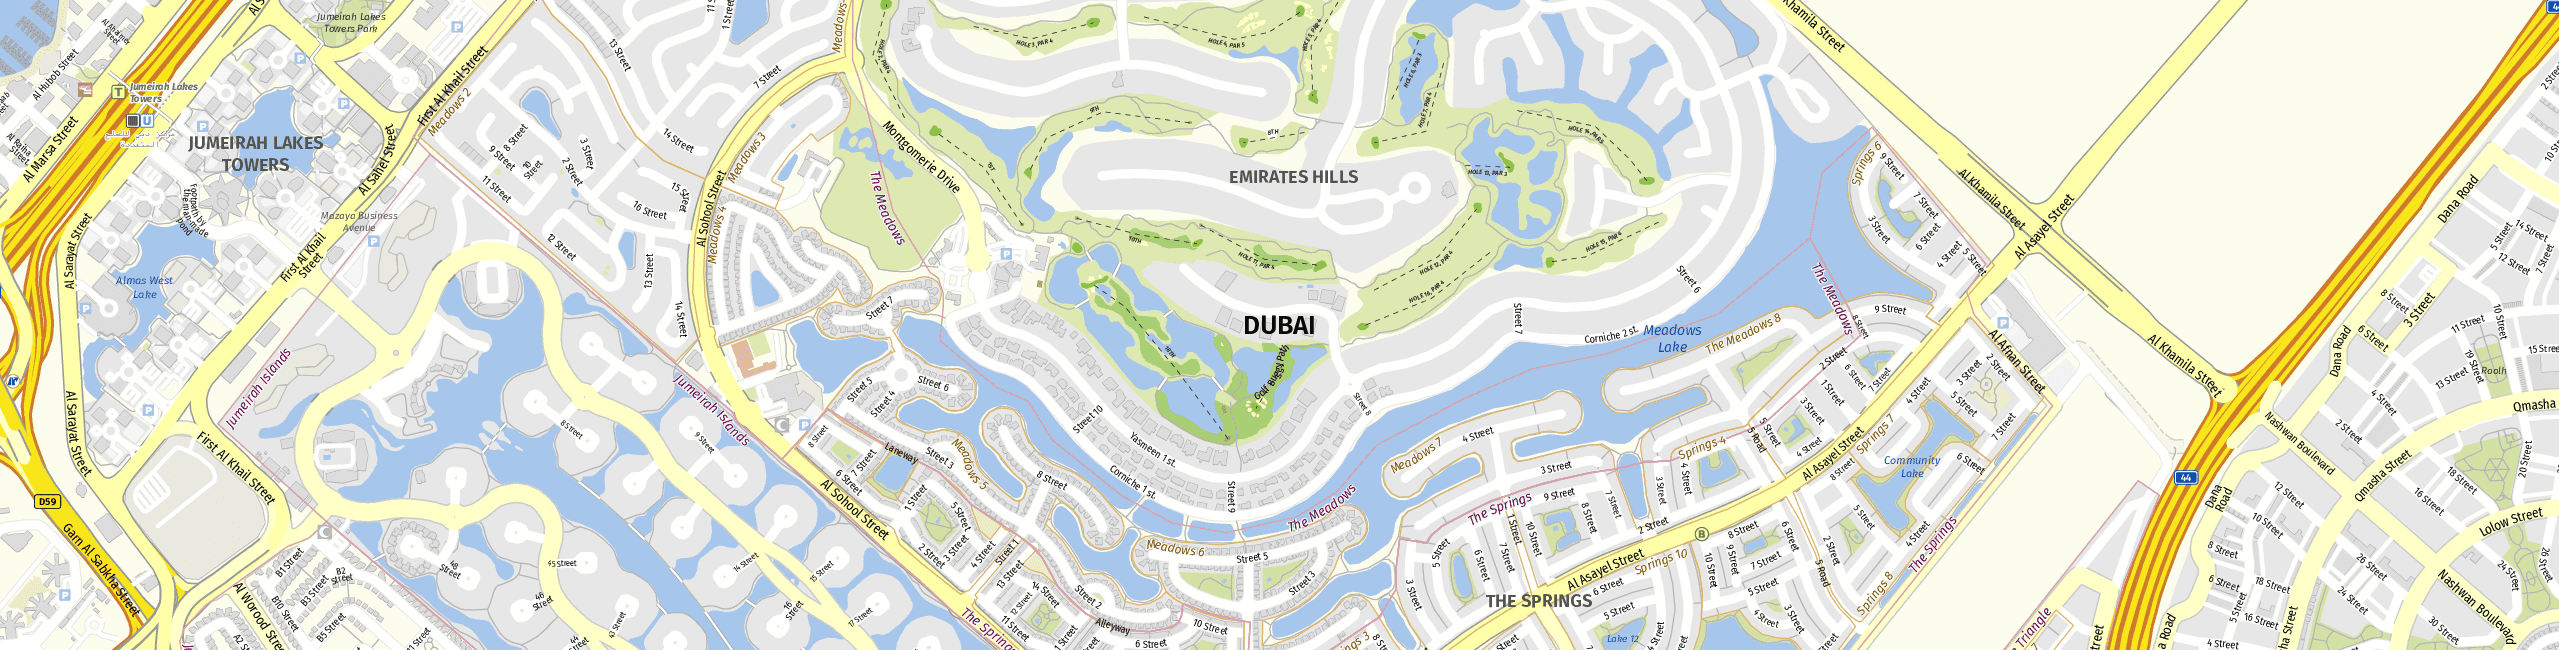 Stadtplan Dubai zum Downloaden.